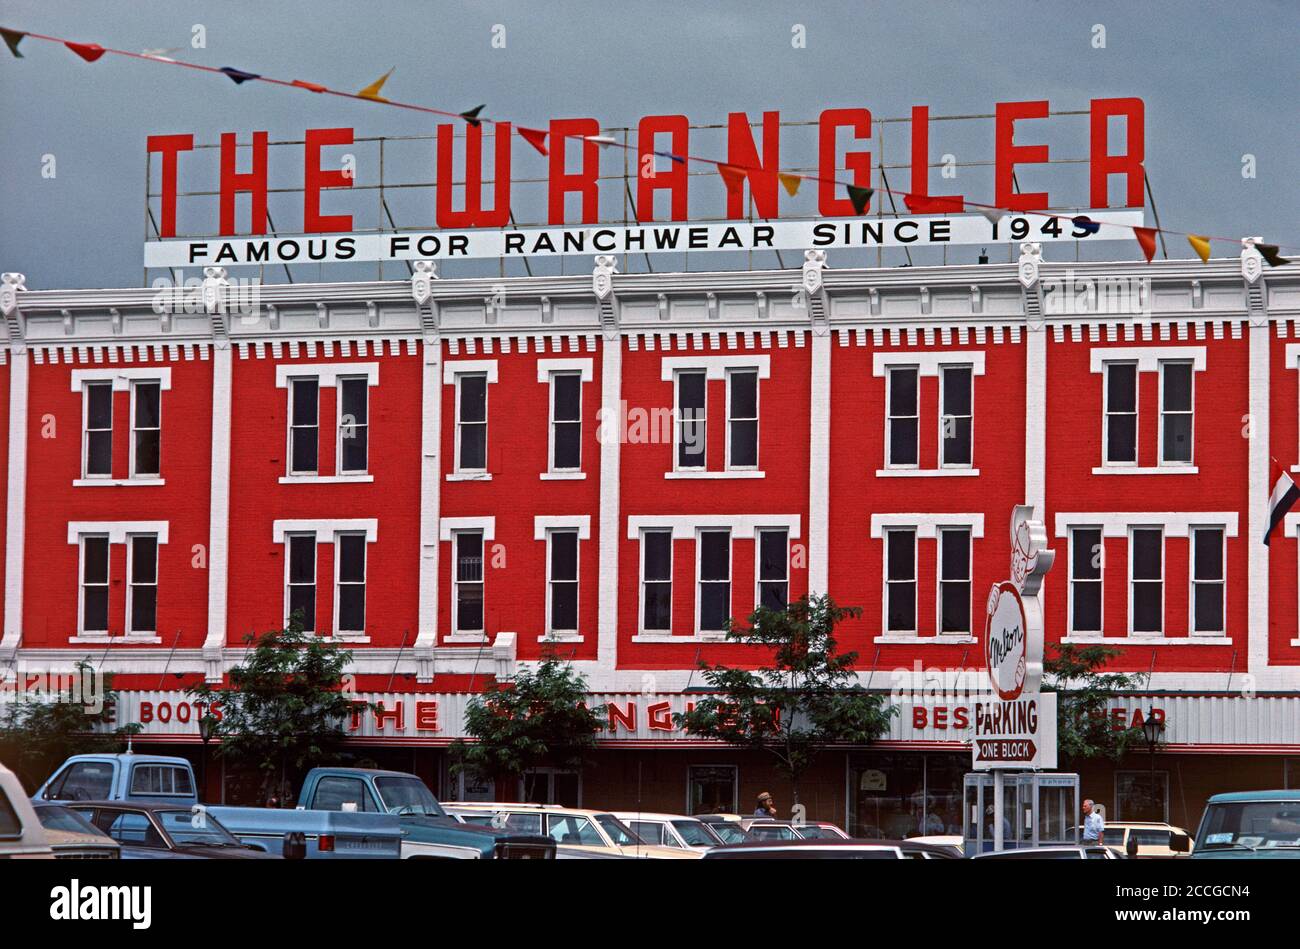 THE HISTORIC WRANGLER RANCHWEAR STORE IN DOWNTOWN CHEYENNE, WYOMING,  USA-1979 Stock Photo - Alamy